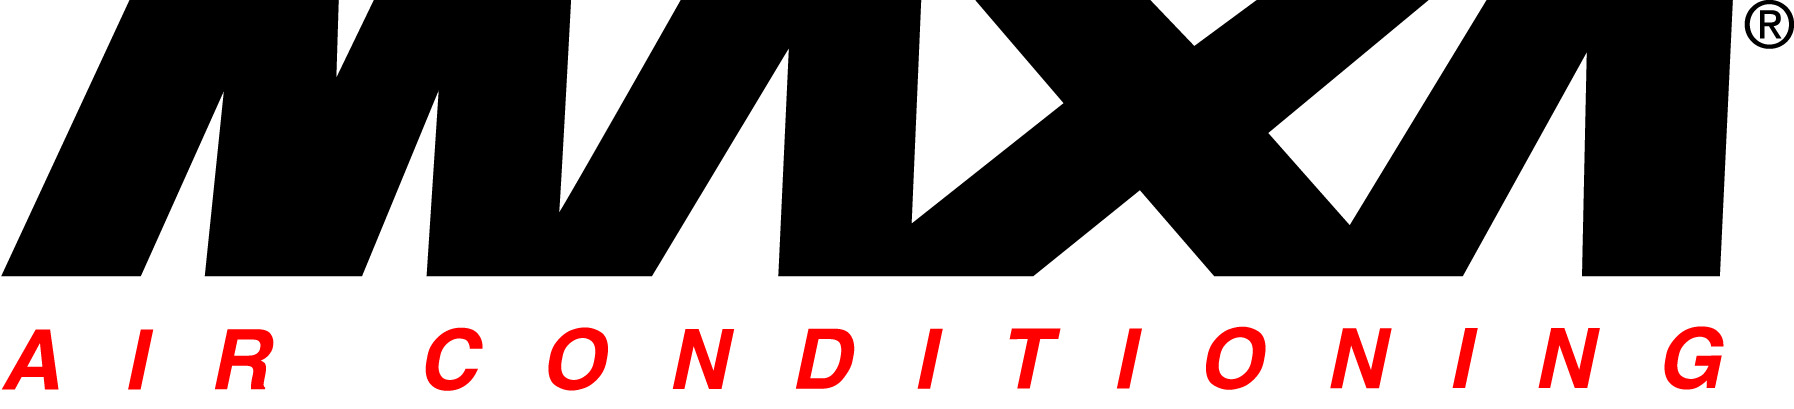 maxa logo